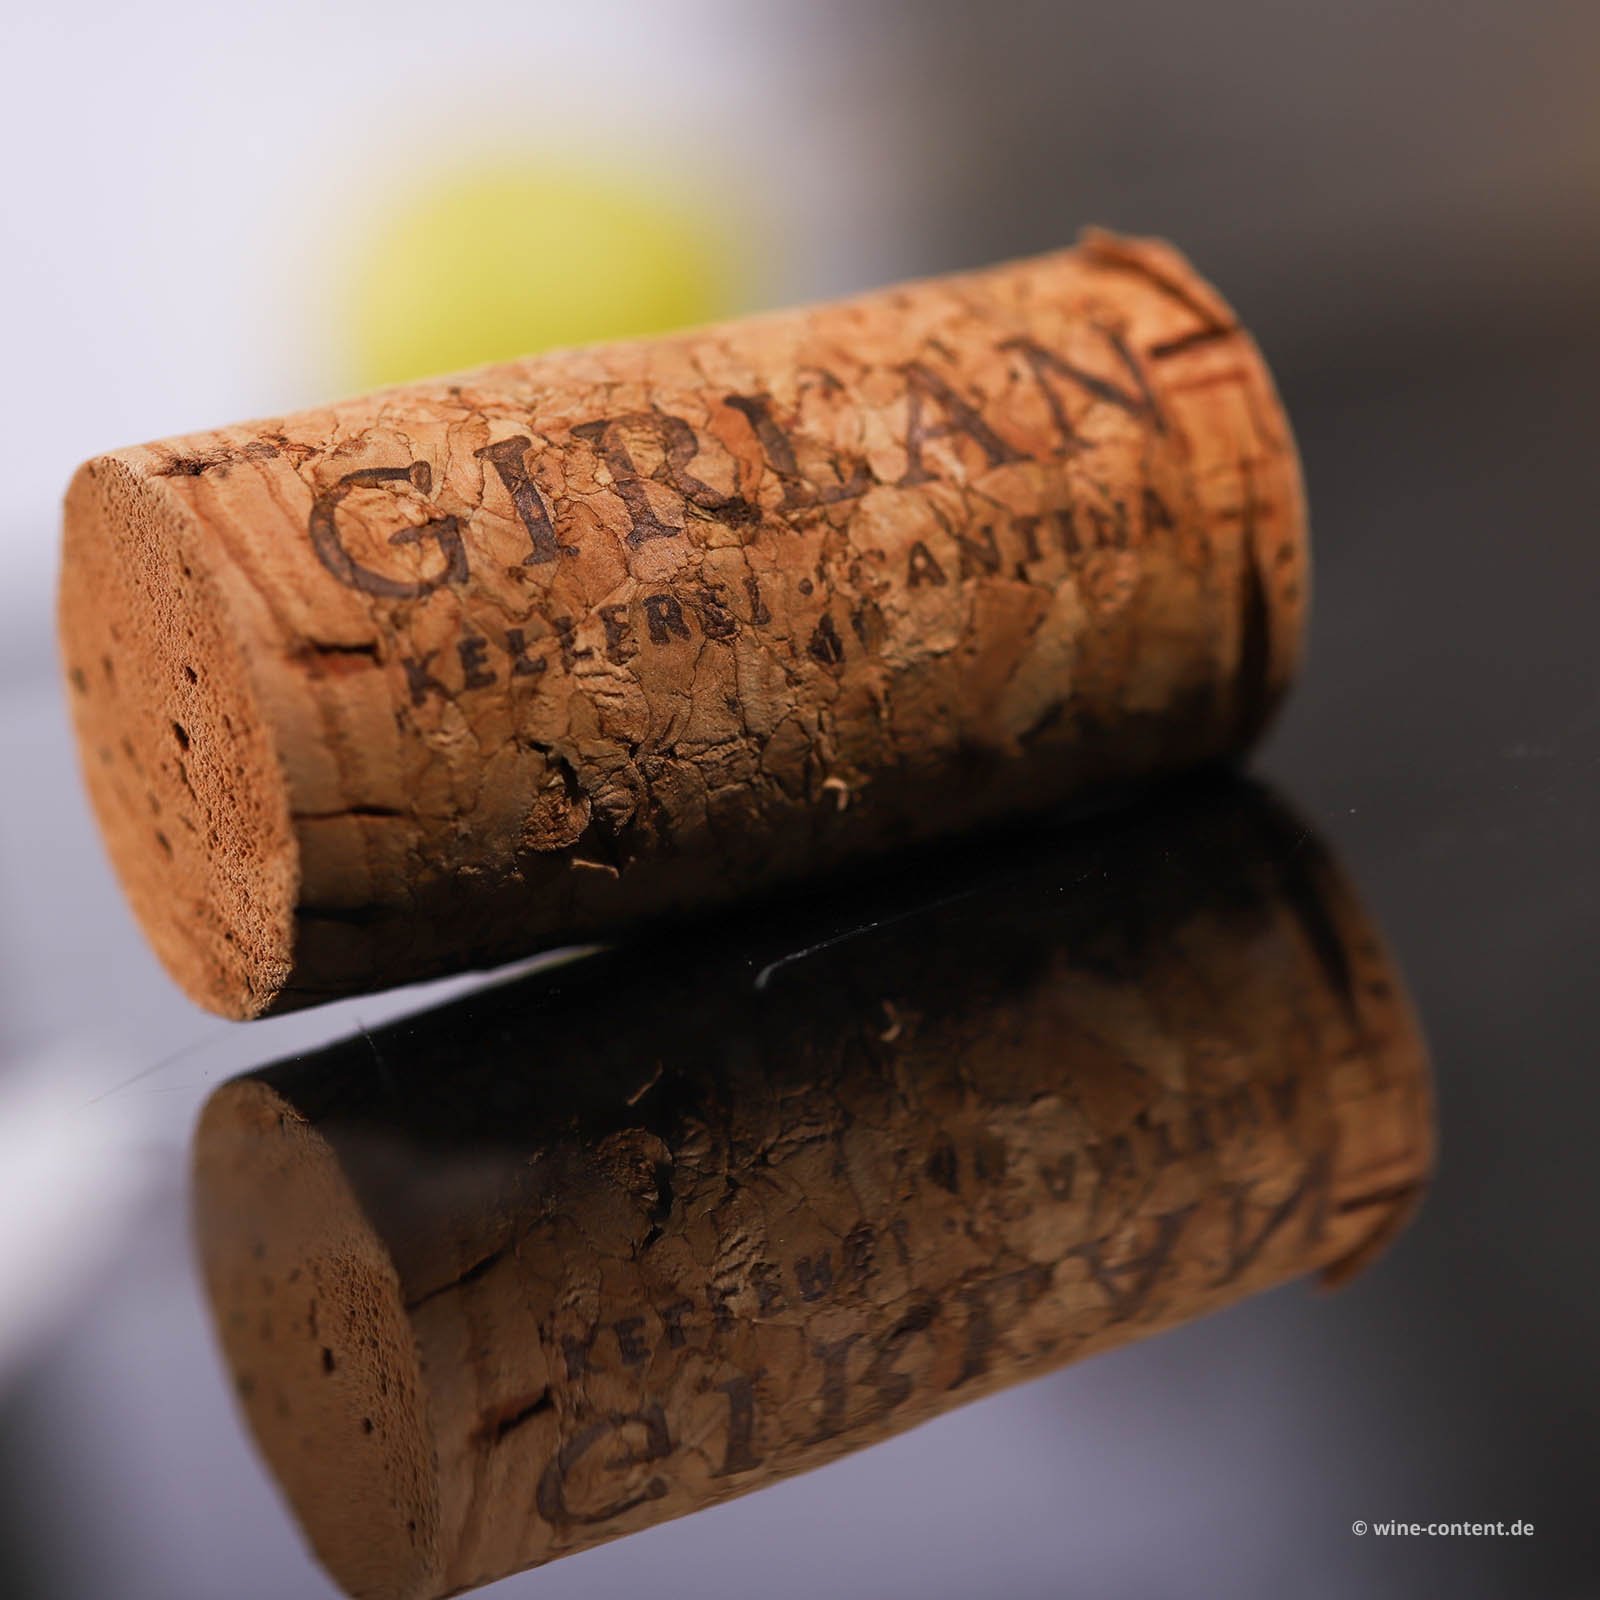 Chardonnay 2020 Curlan